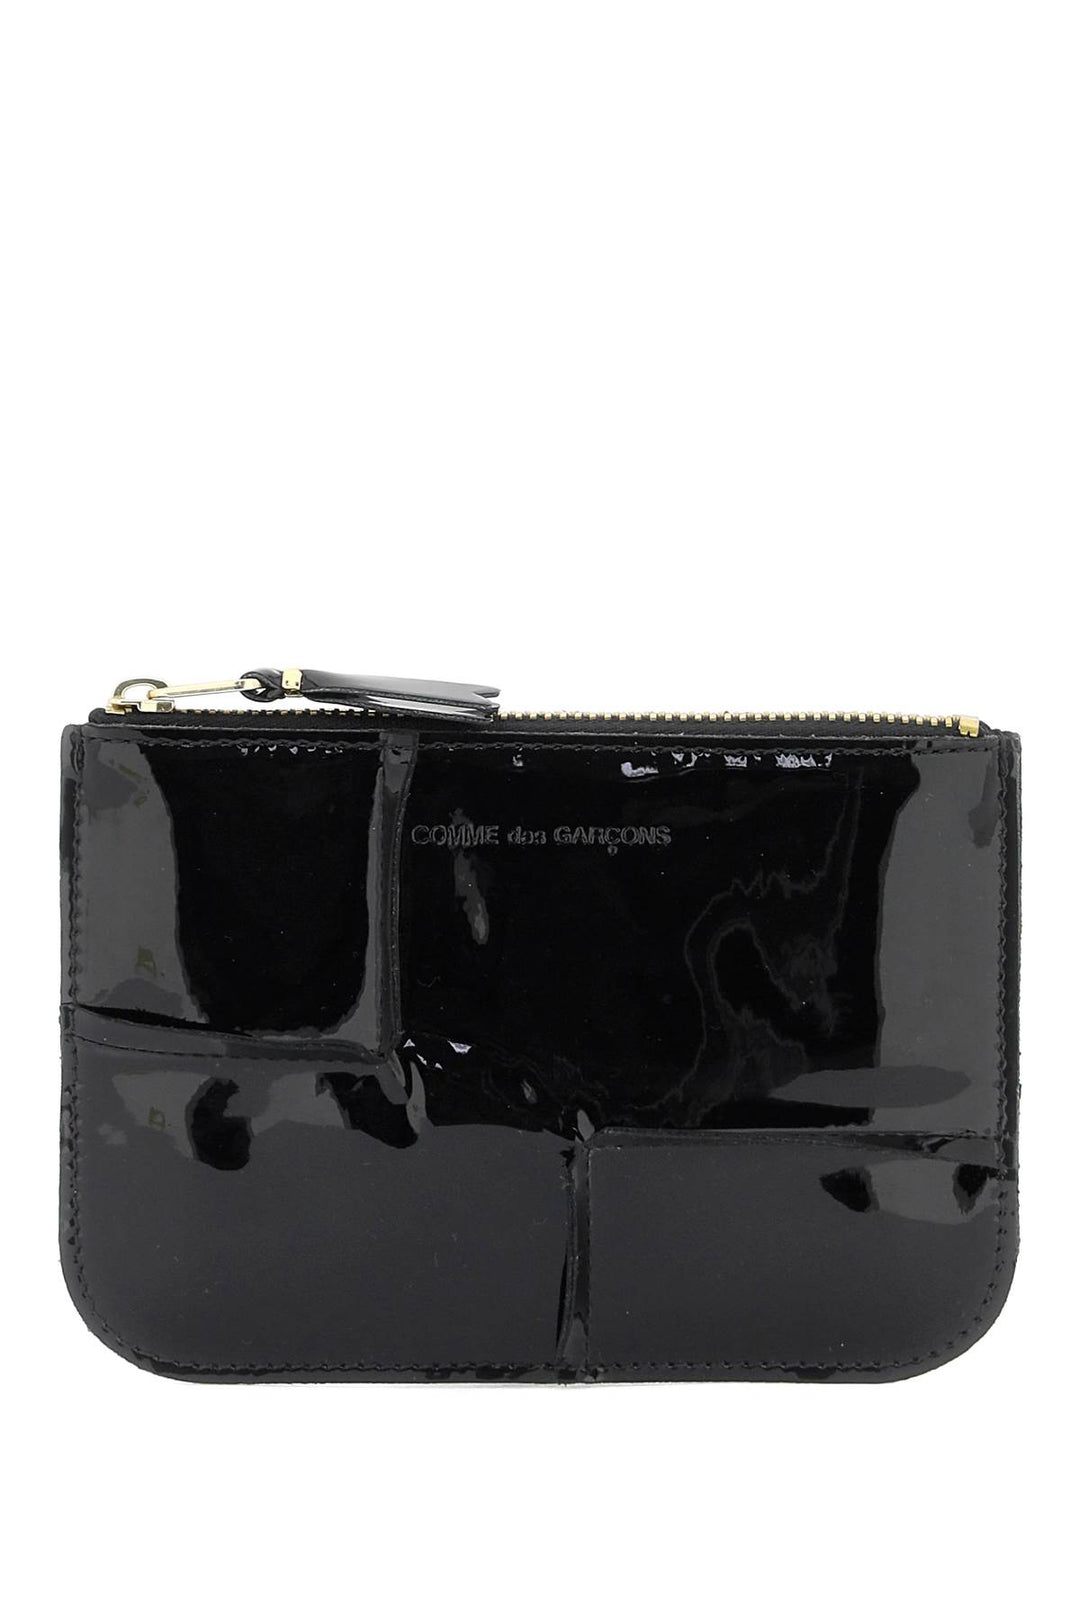 Comme Des Garcons Wallet Zip Around Patent Leather Wallet With Zipper   Nero